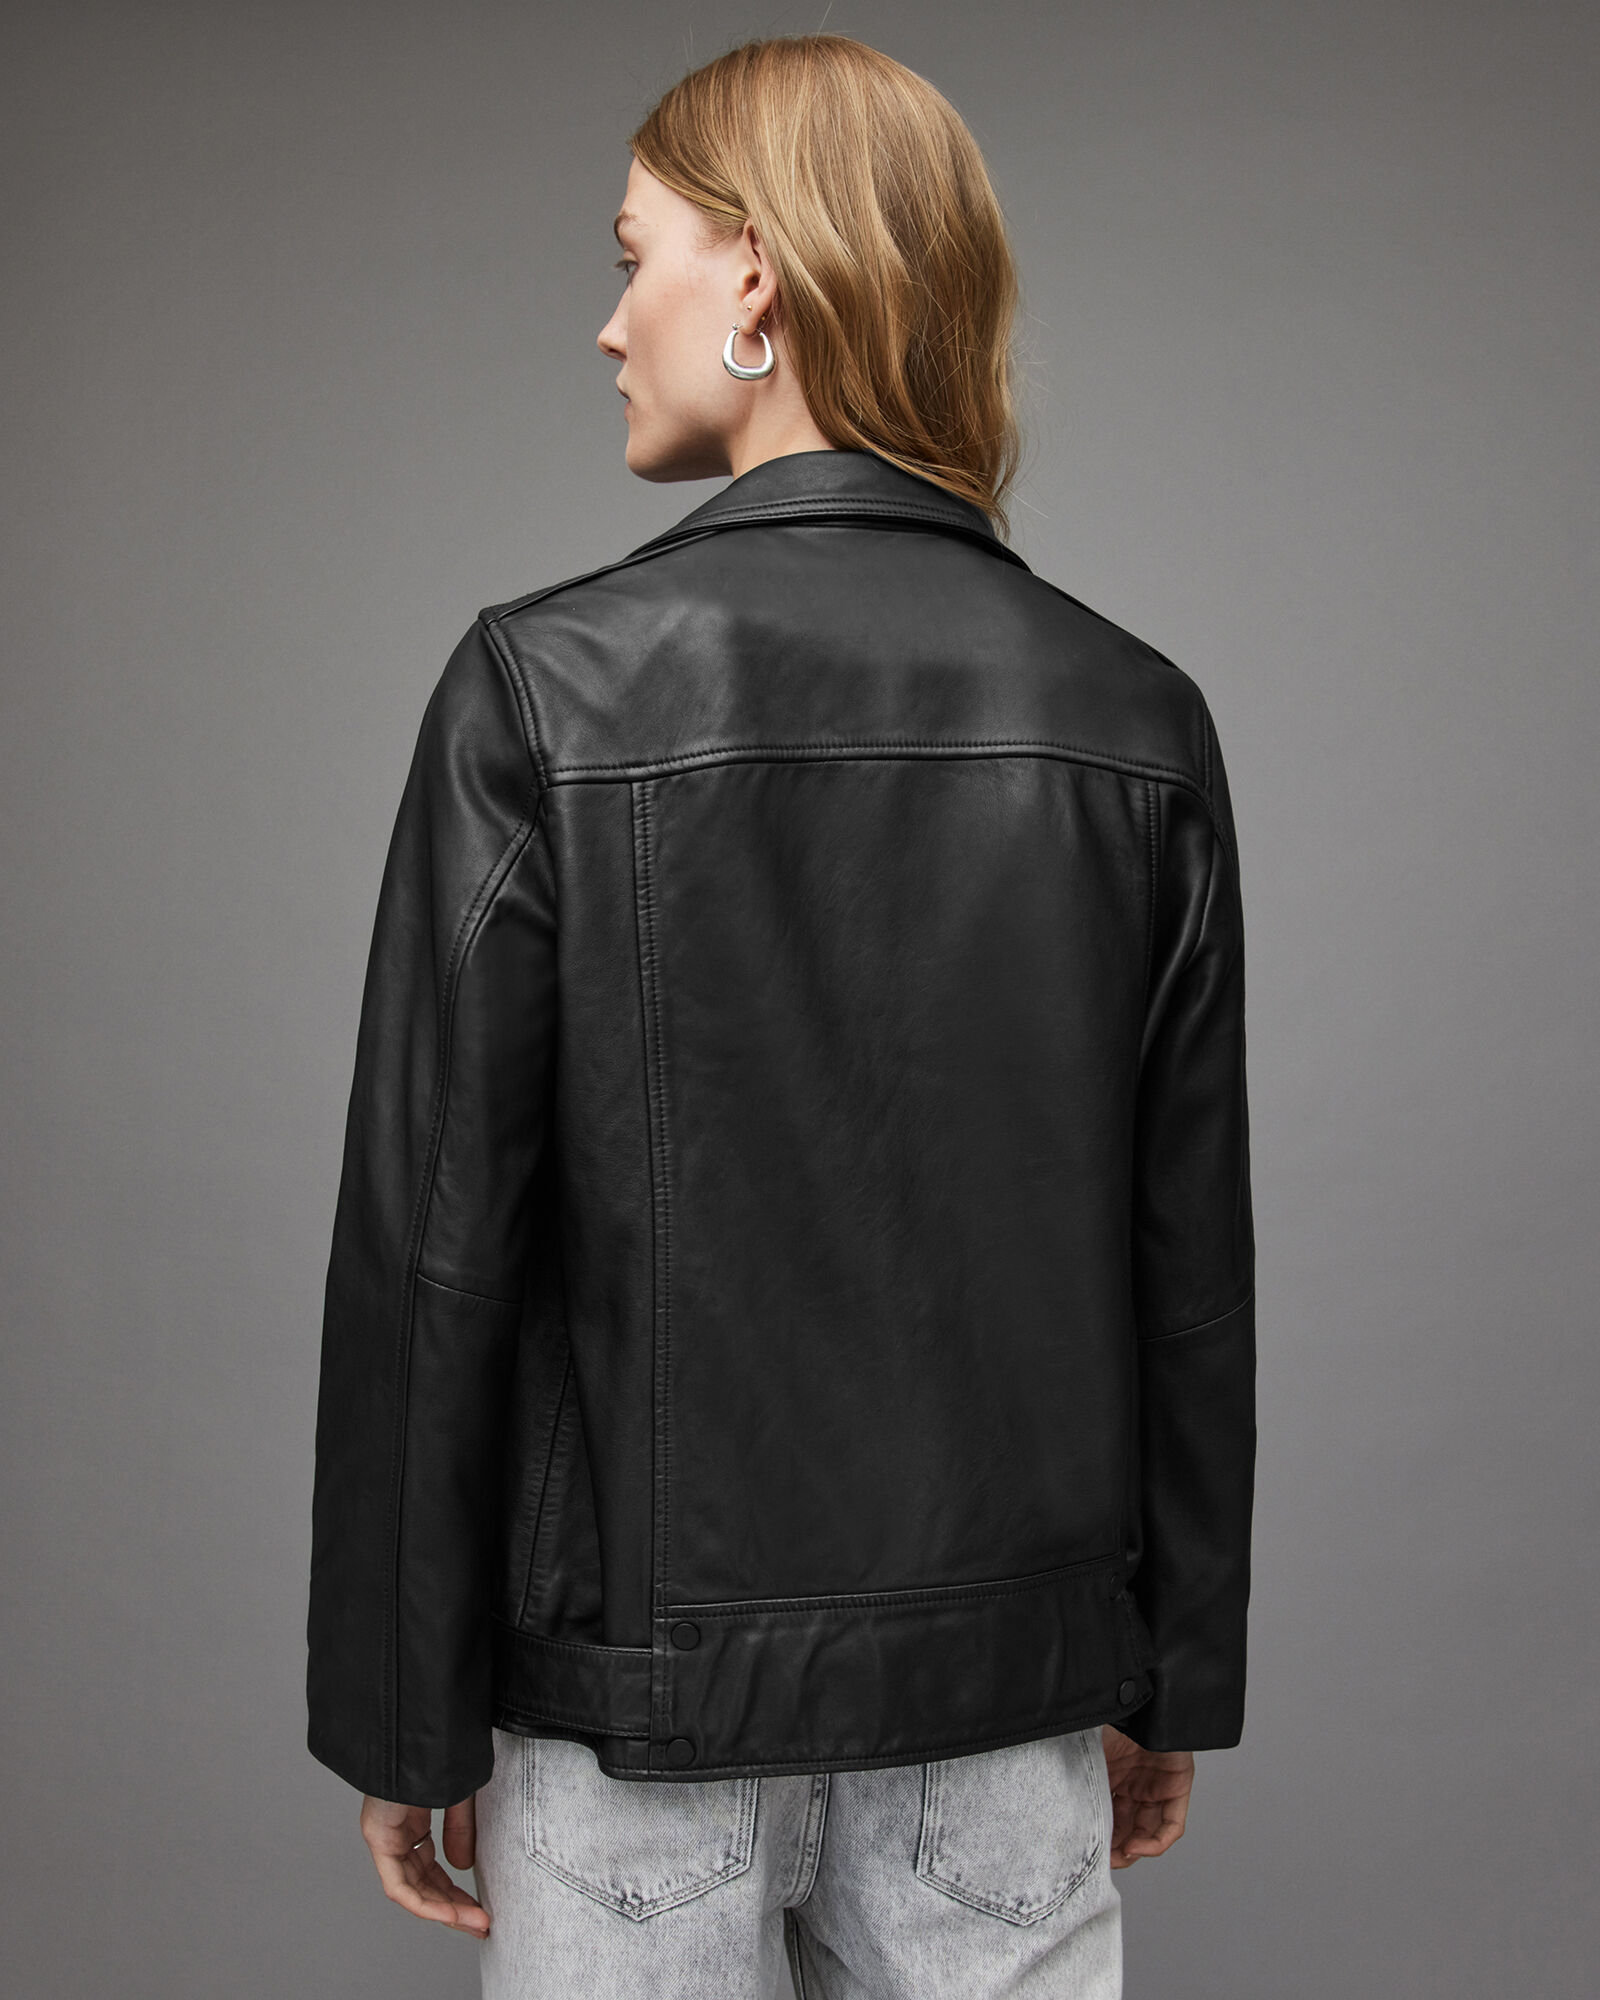 HELEN Green Oversized Leather Jacket | Women's Leather Jacket Models